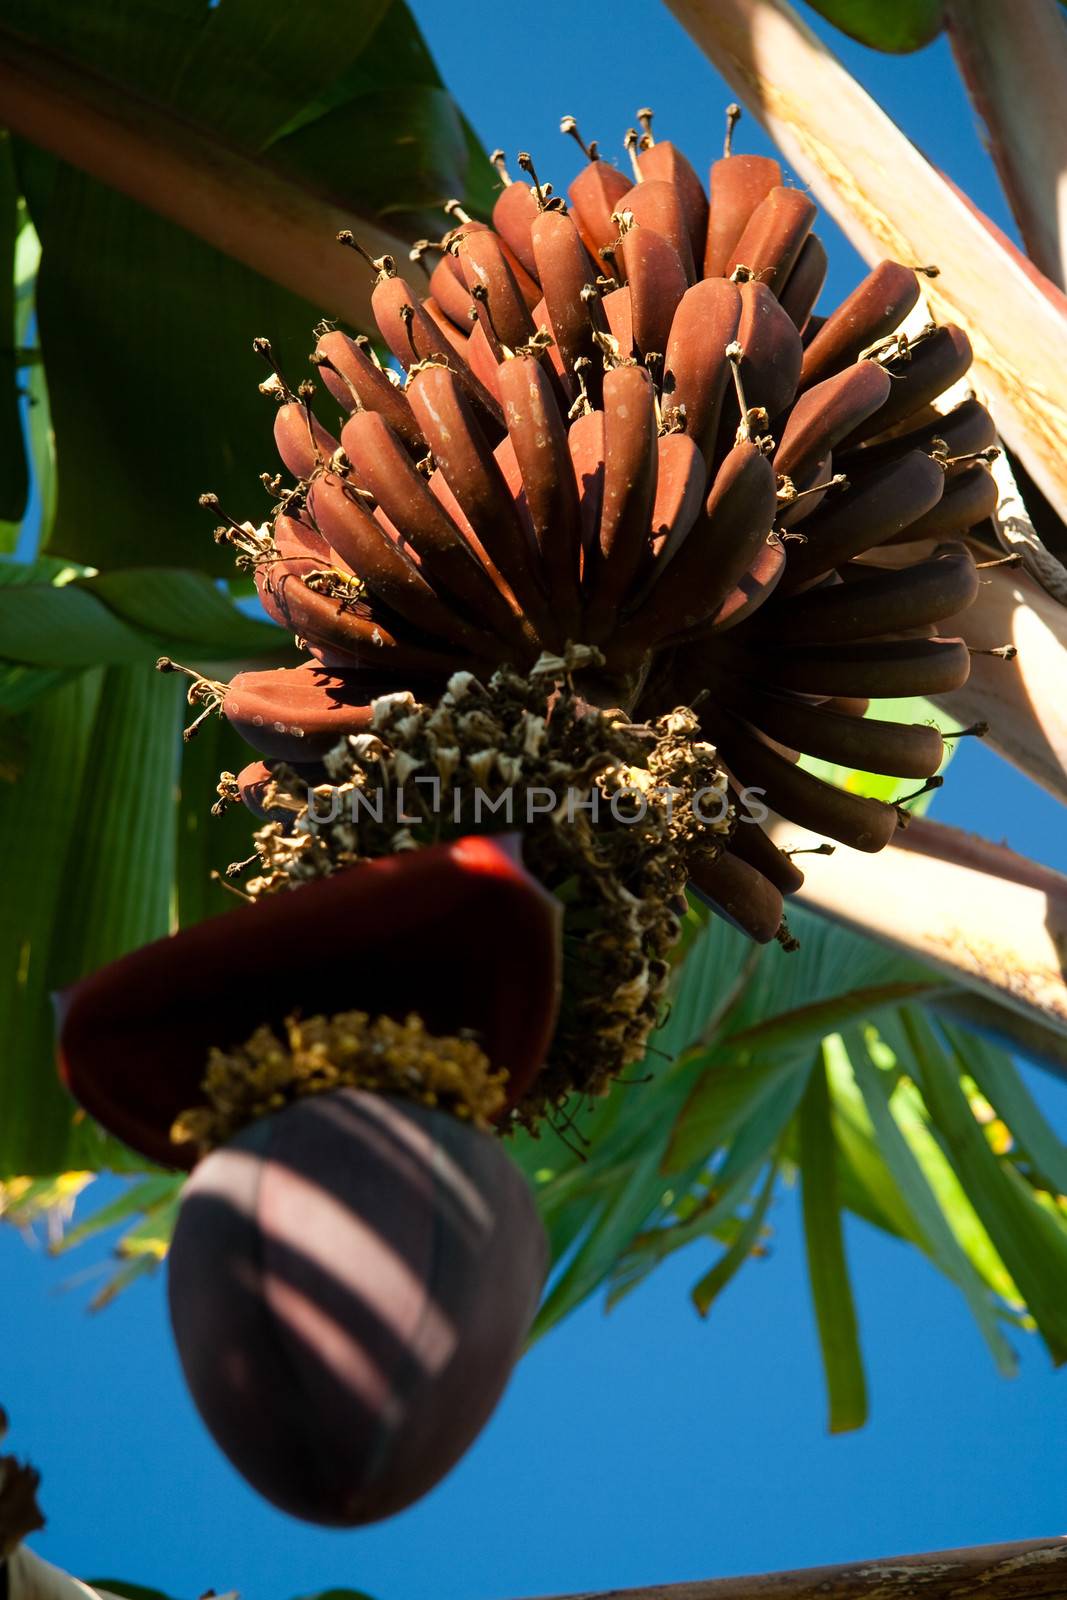 Banana bunch on tree by CelsoDiniz